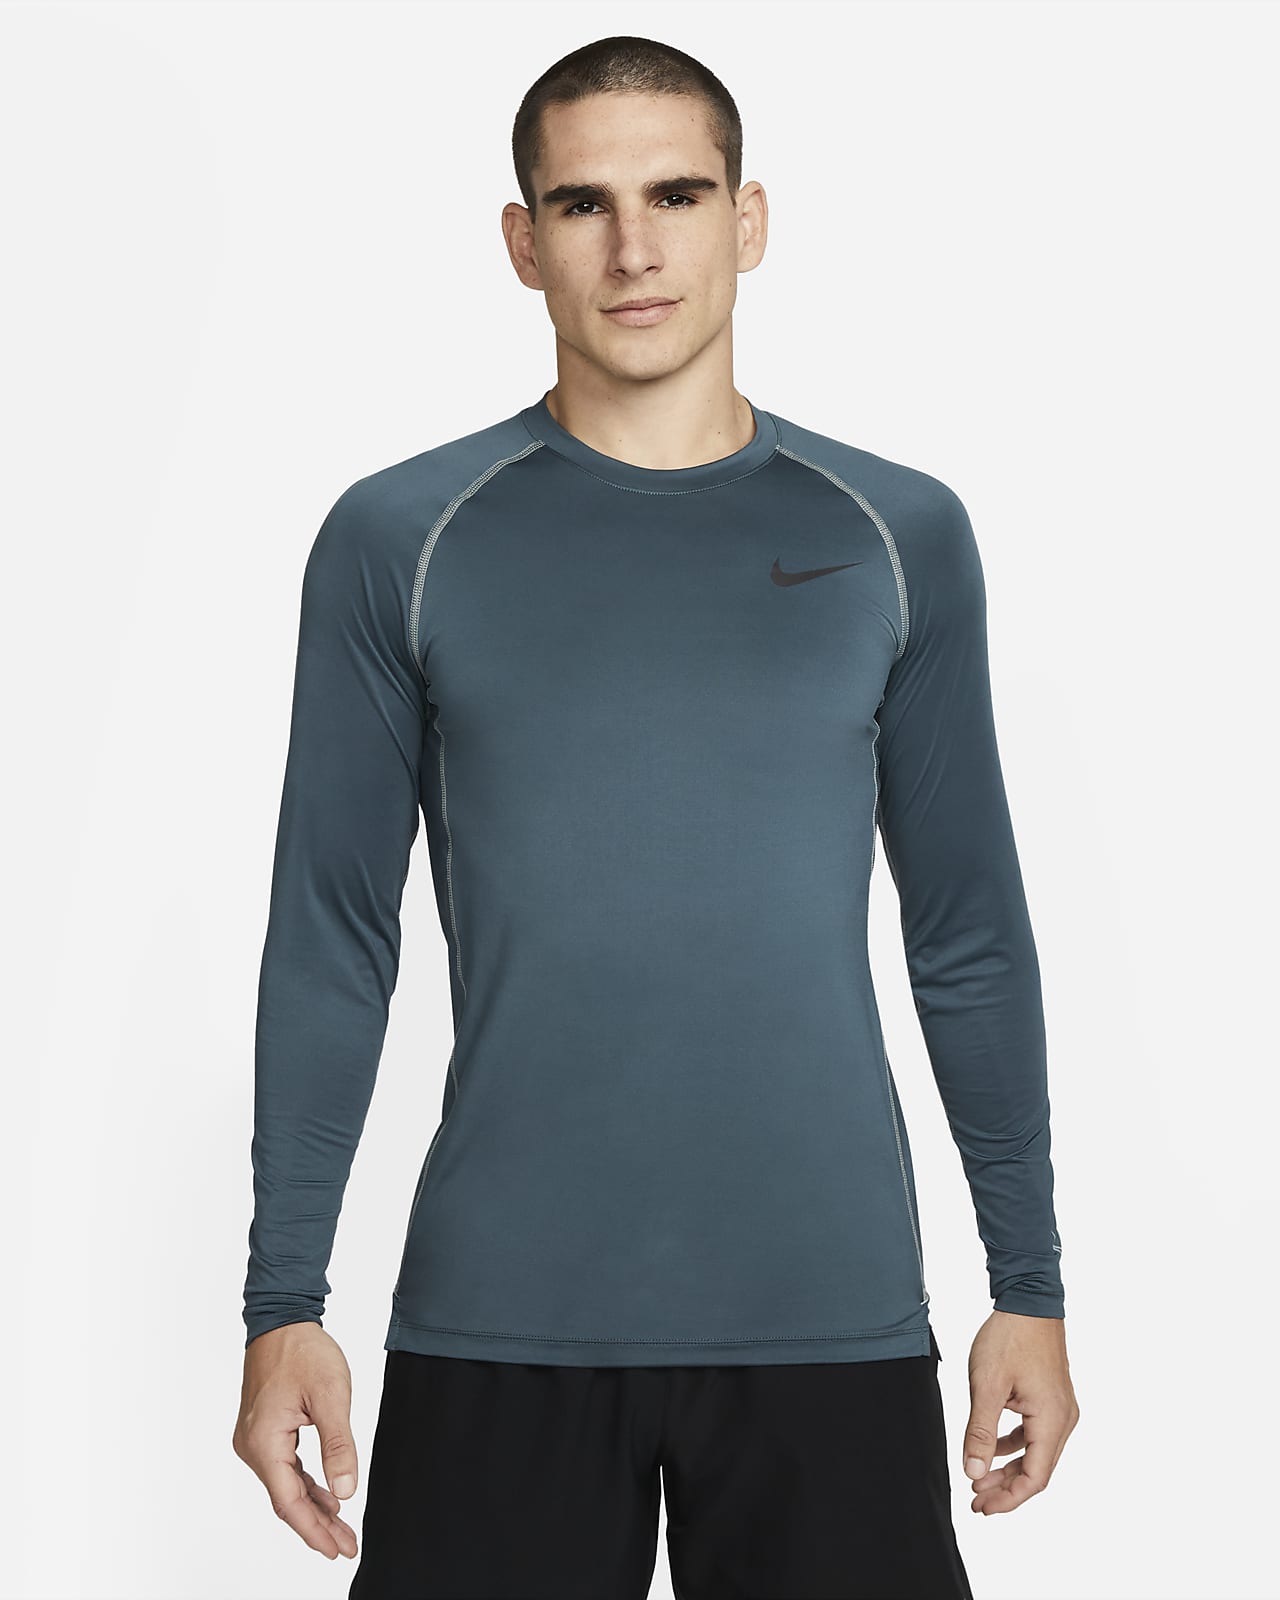 Proverbio Enriquecer estaño Camiseta de manga larga y ajuste entallado para hombre Nike Pro Dri-FIT.  Nike.com